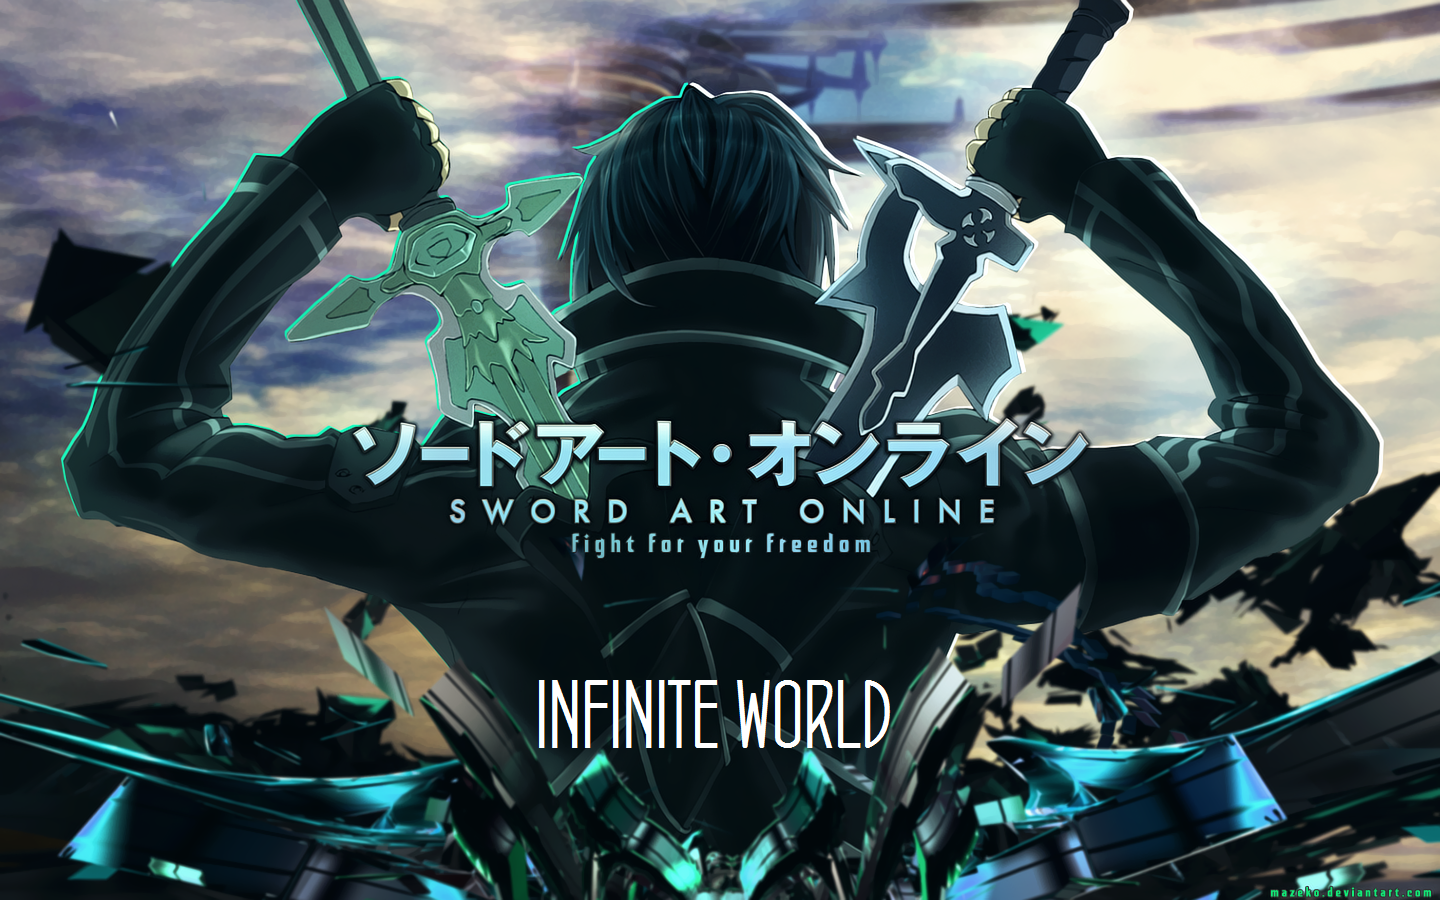 Sword Art Online: Infinite World